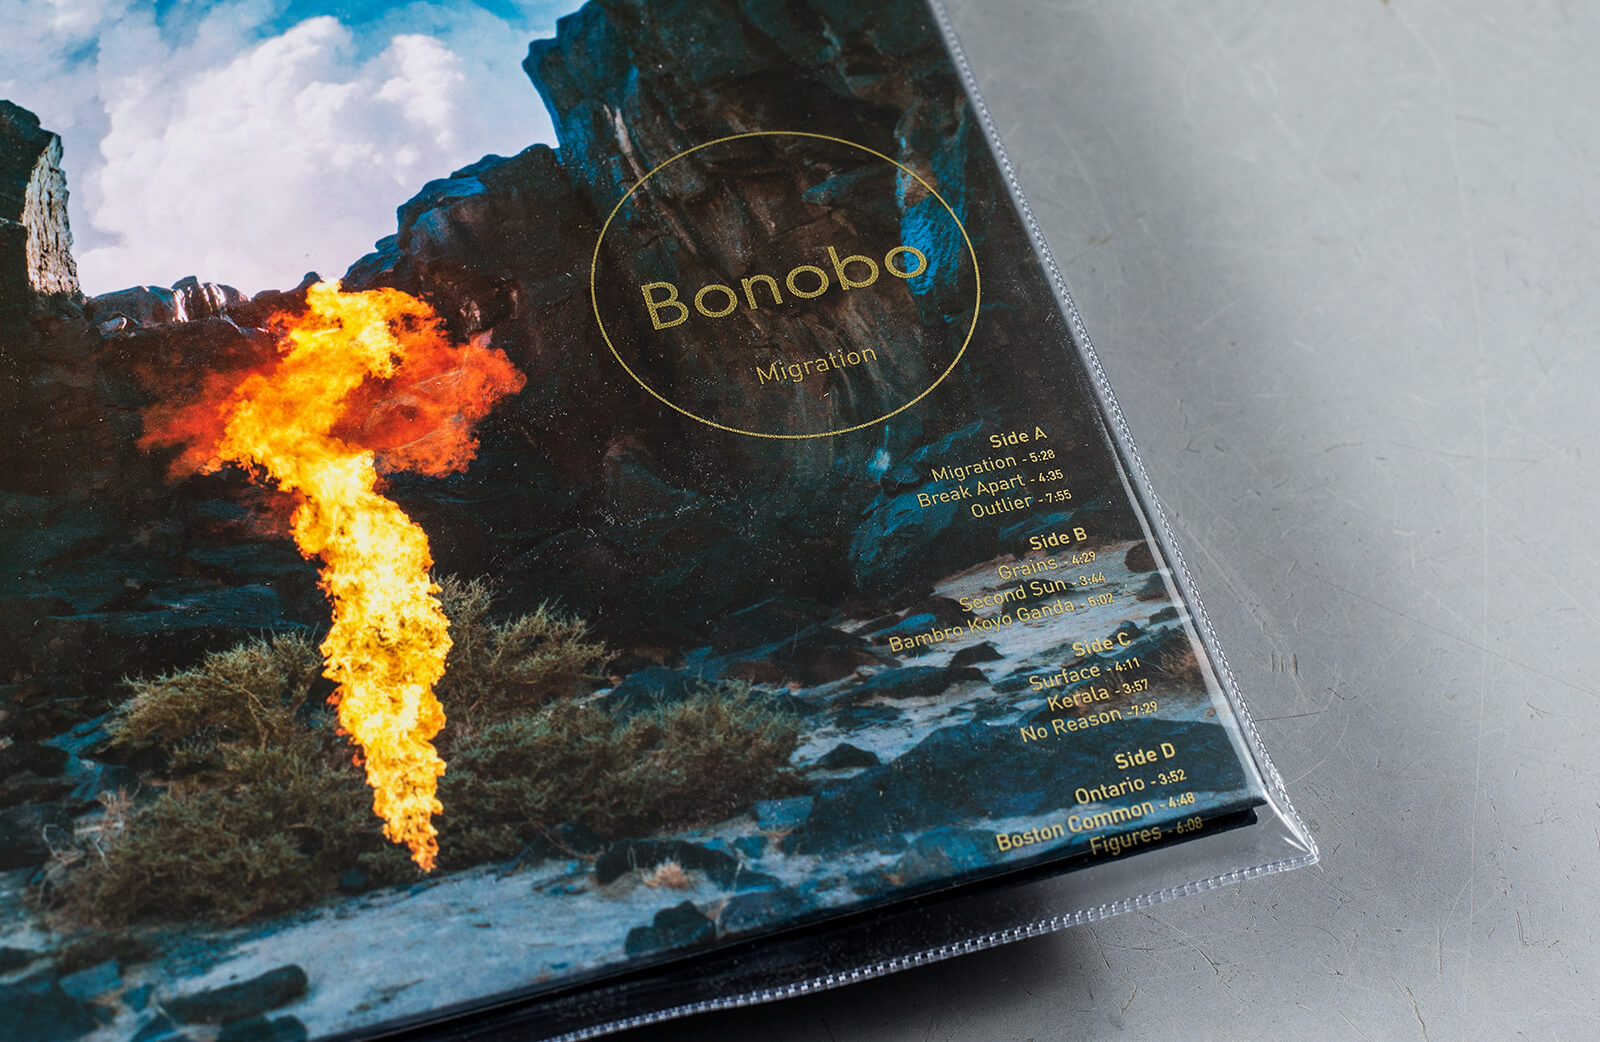 bonobo-migration-vinyl-edition_0009_at8w0031